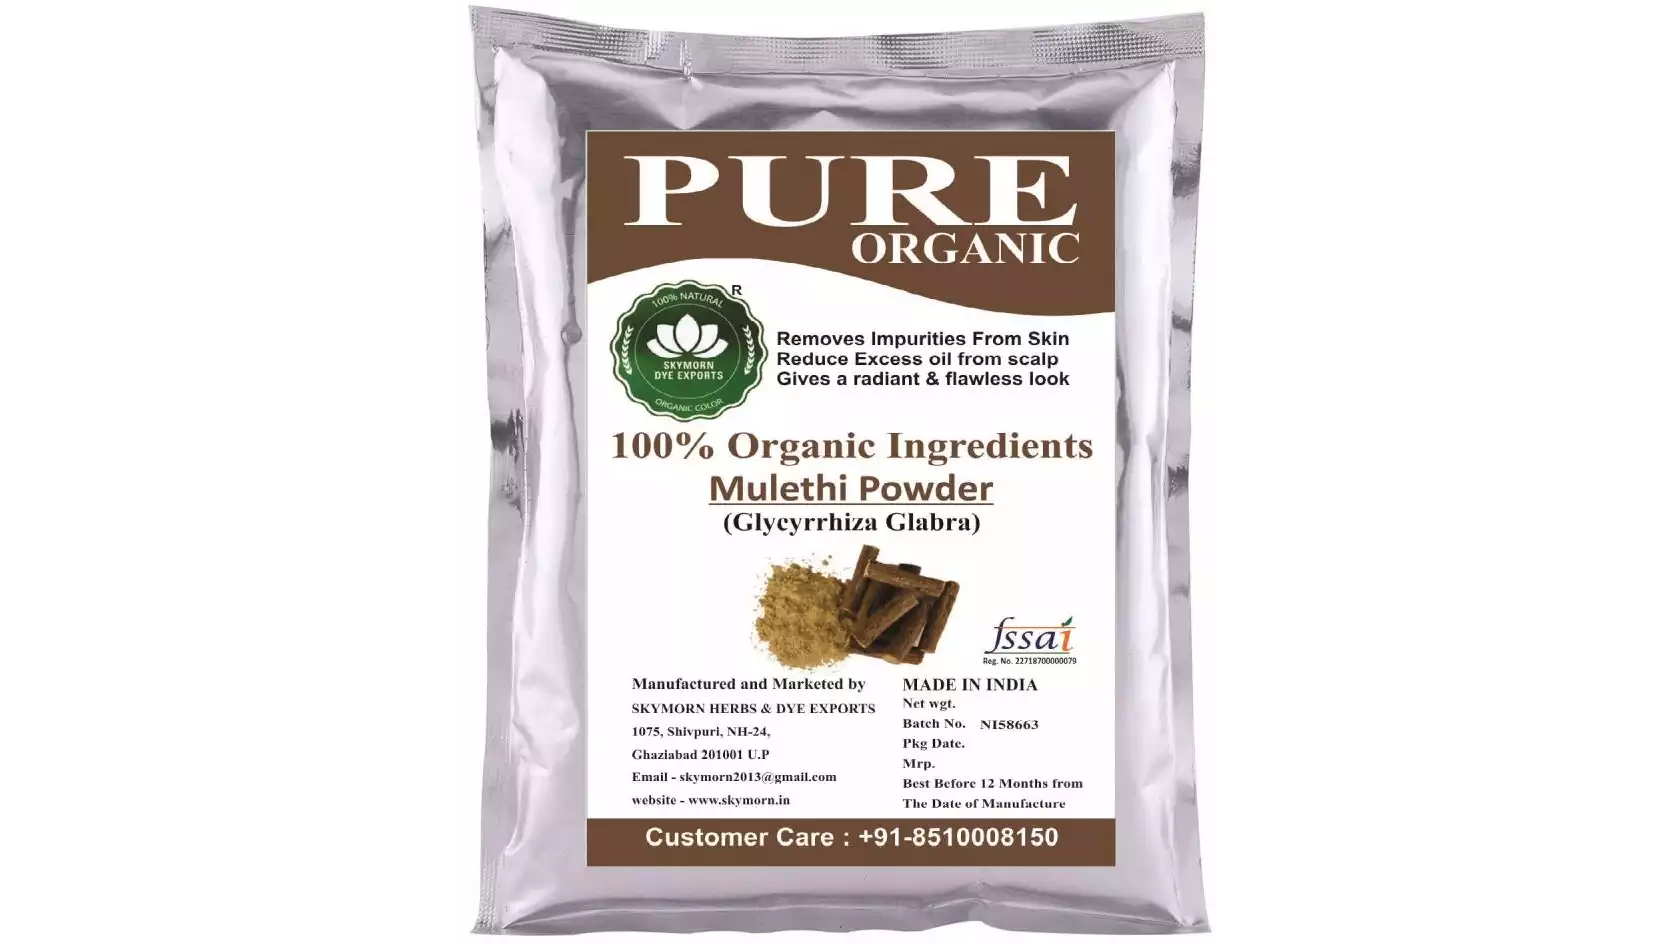 SkyMorn Pure Organic Mulathi (Licorice) Powder (300g)